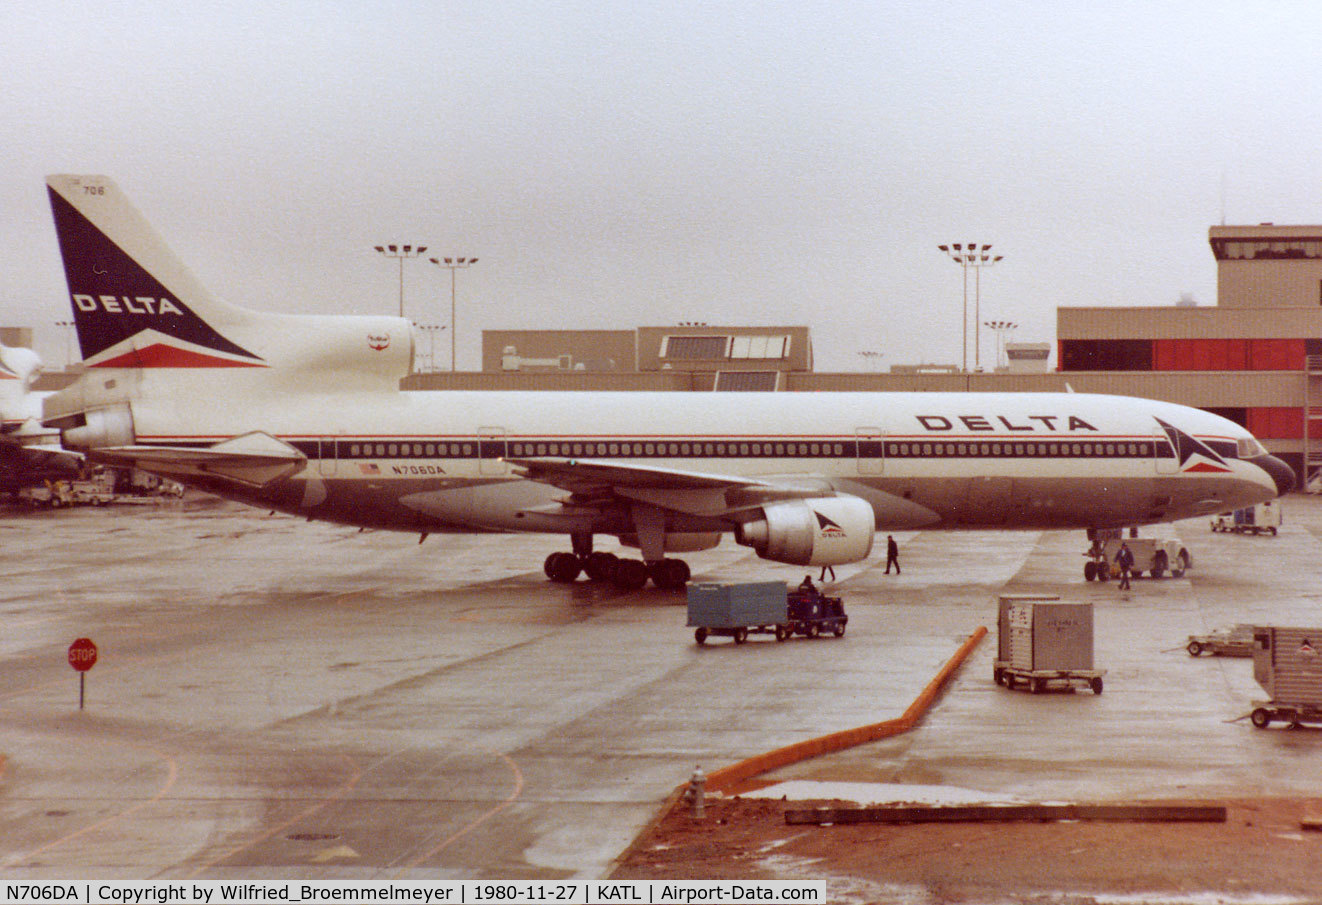 N706DA, 1974 Lockheed L-1011-385-1 TriStar 50 C/N 193C-1074, Rain in Atlanta at Thanks Giving Day in 1980.